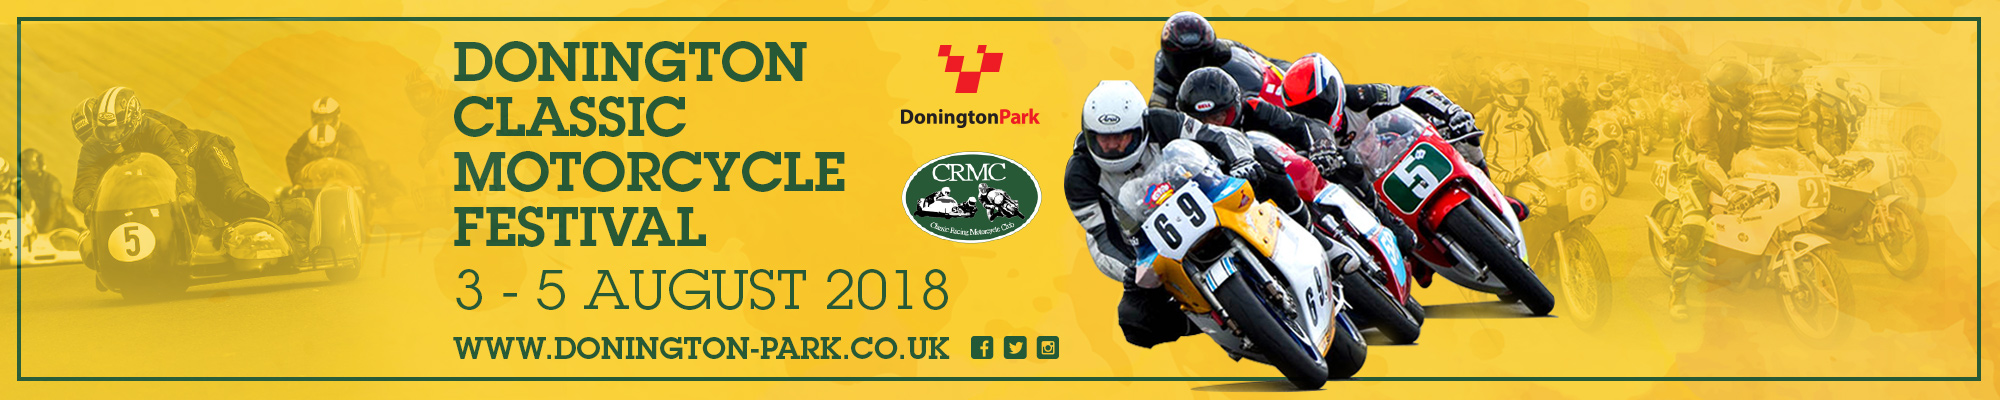 Donington Classic Motorcycle Festival 